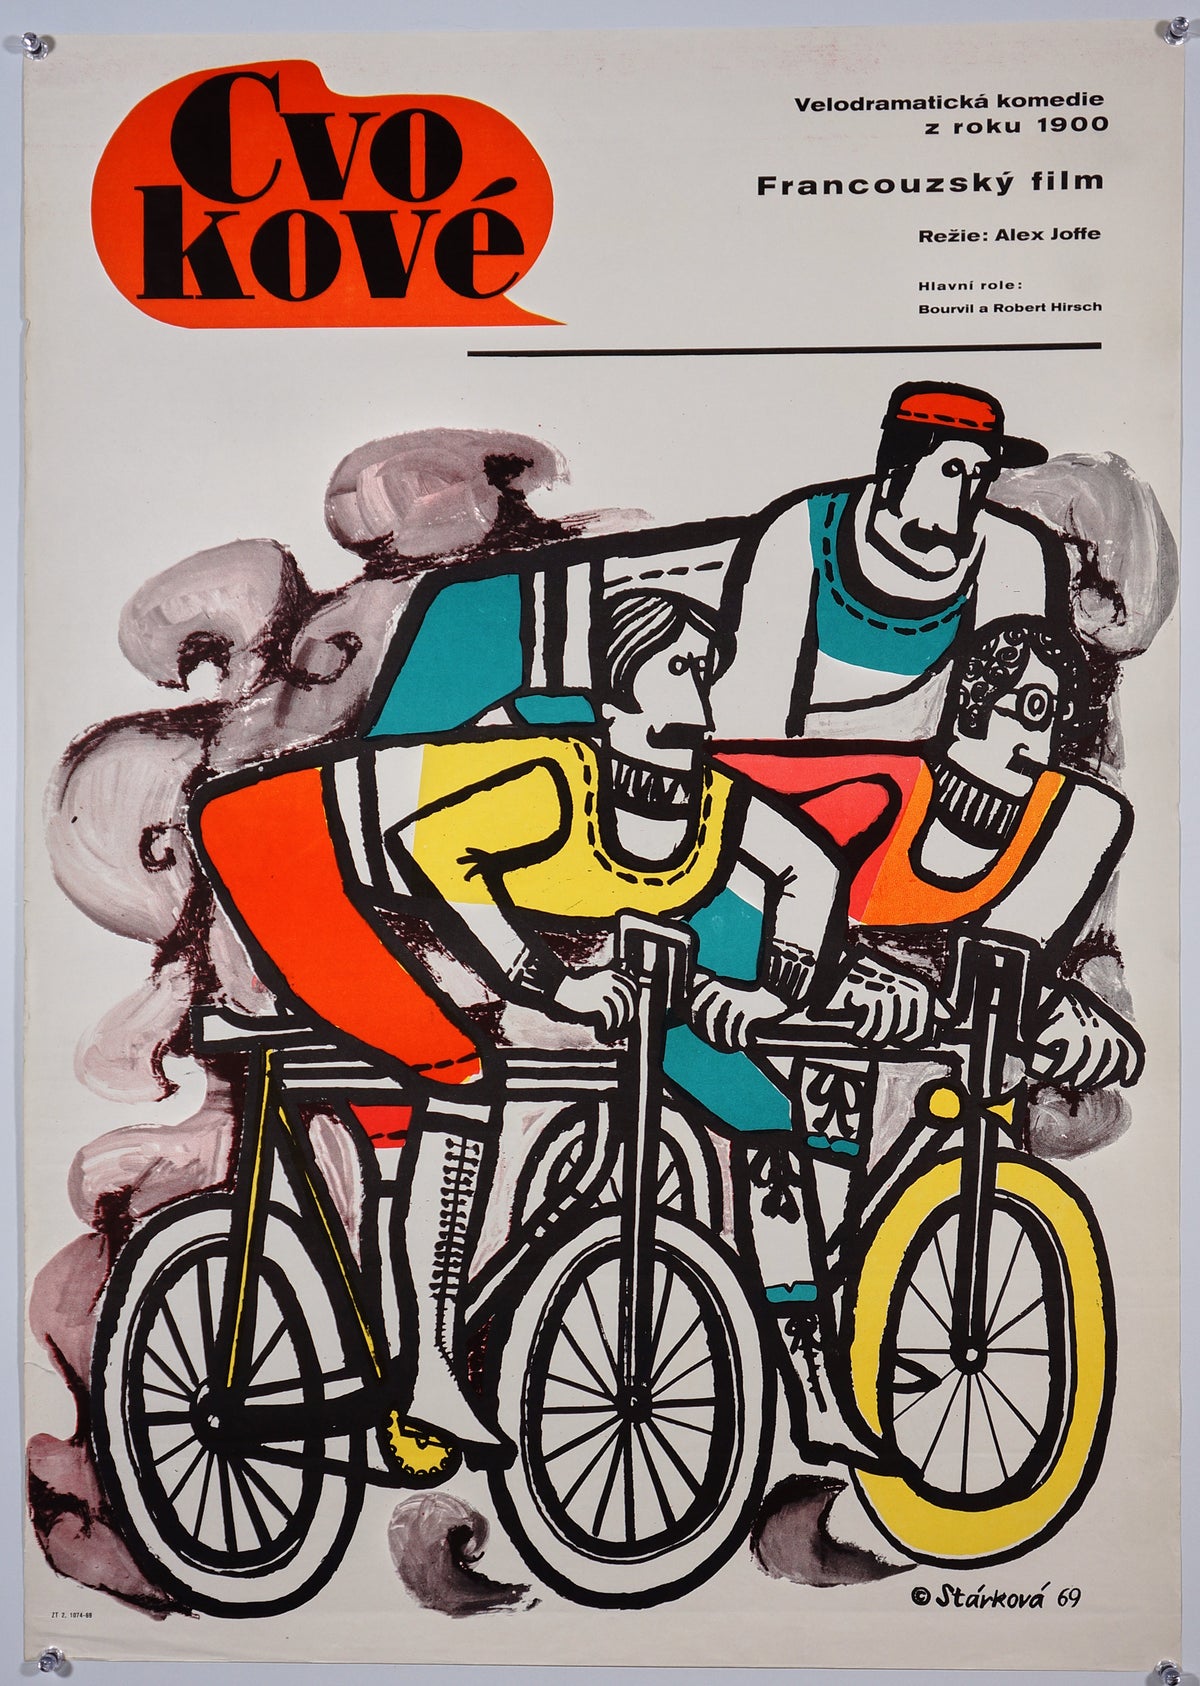 Cvo Kove - Authentic Vintage Poster